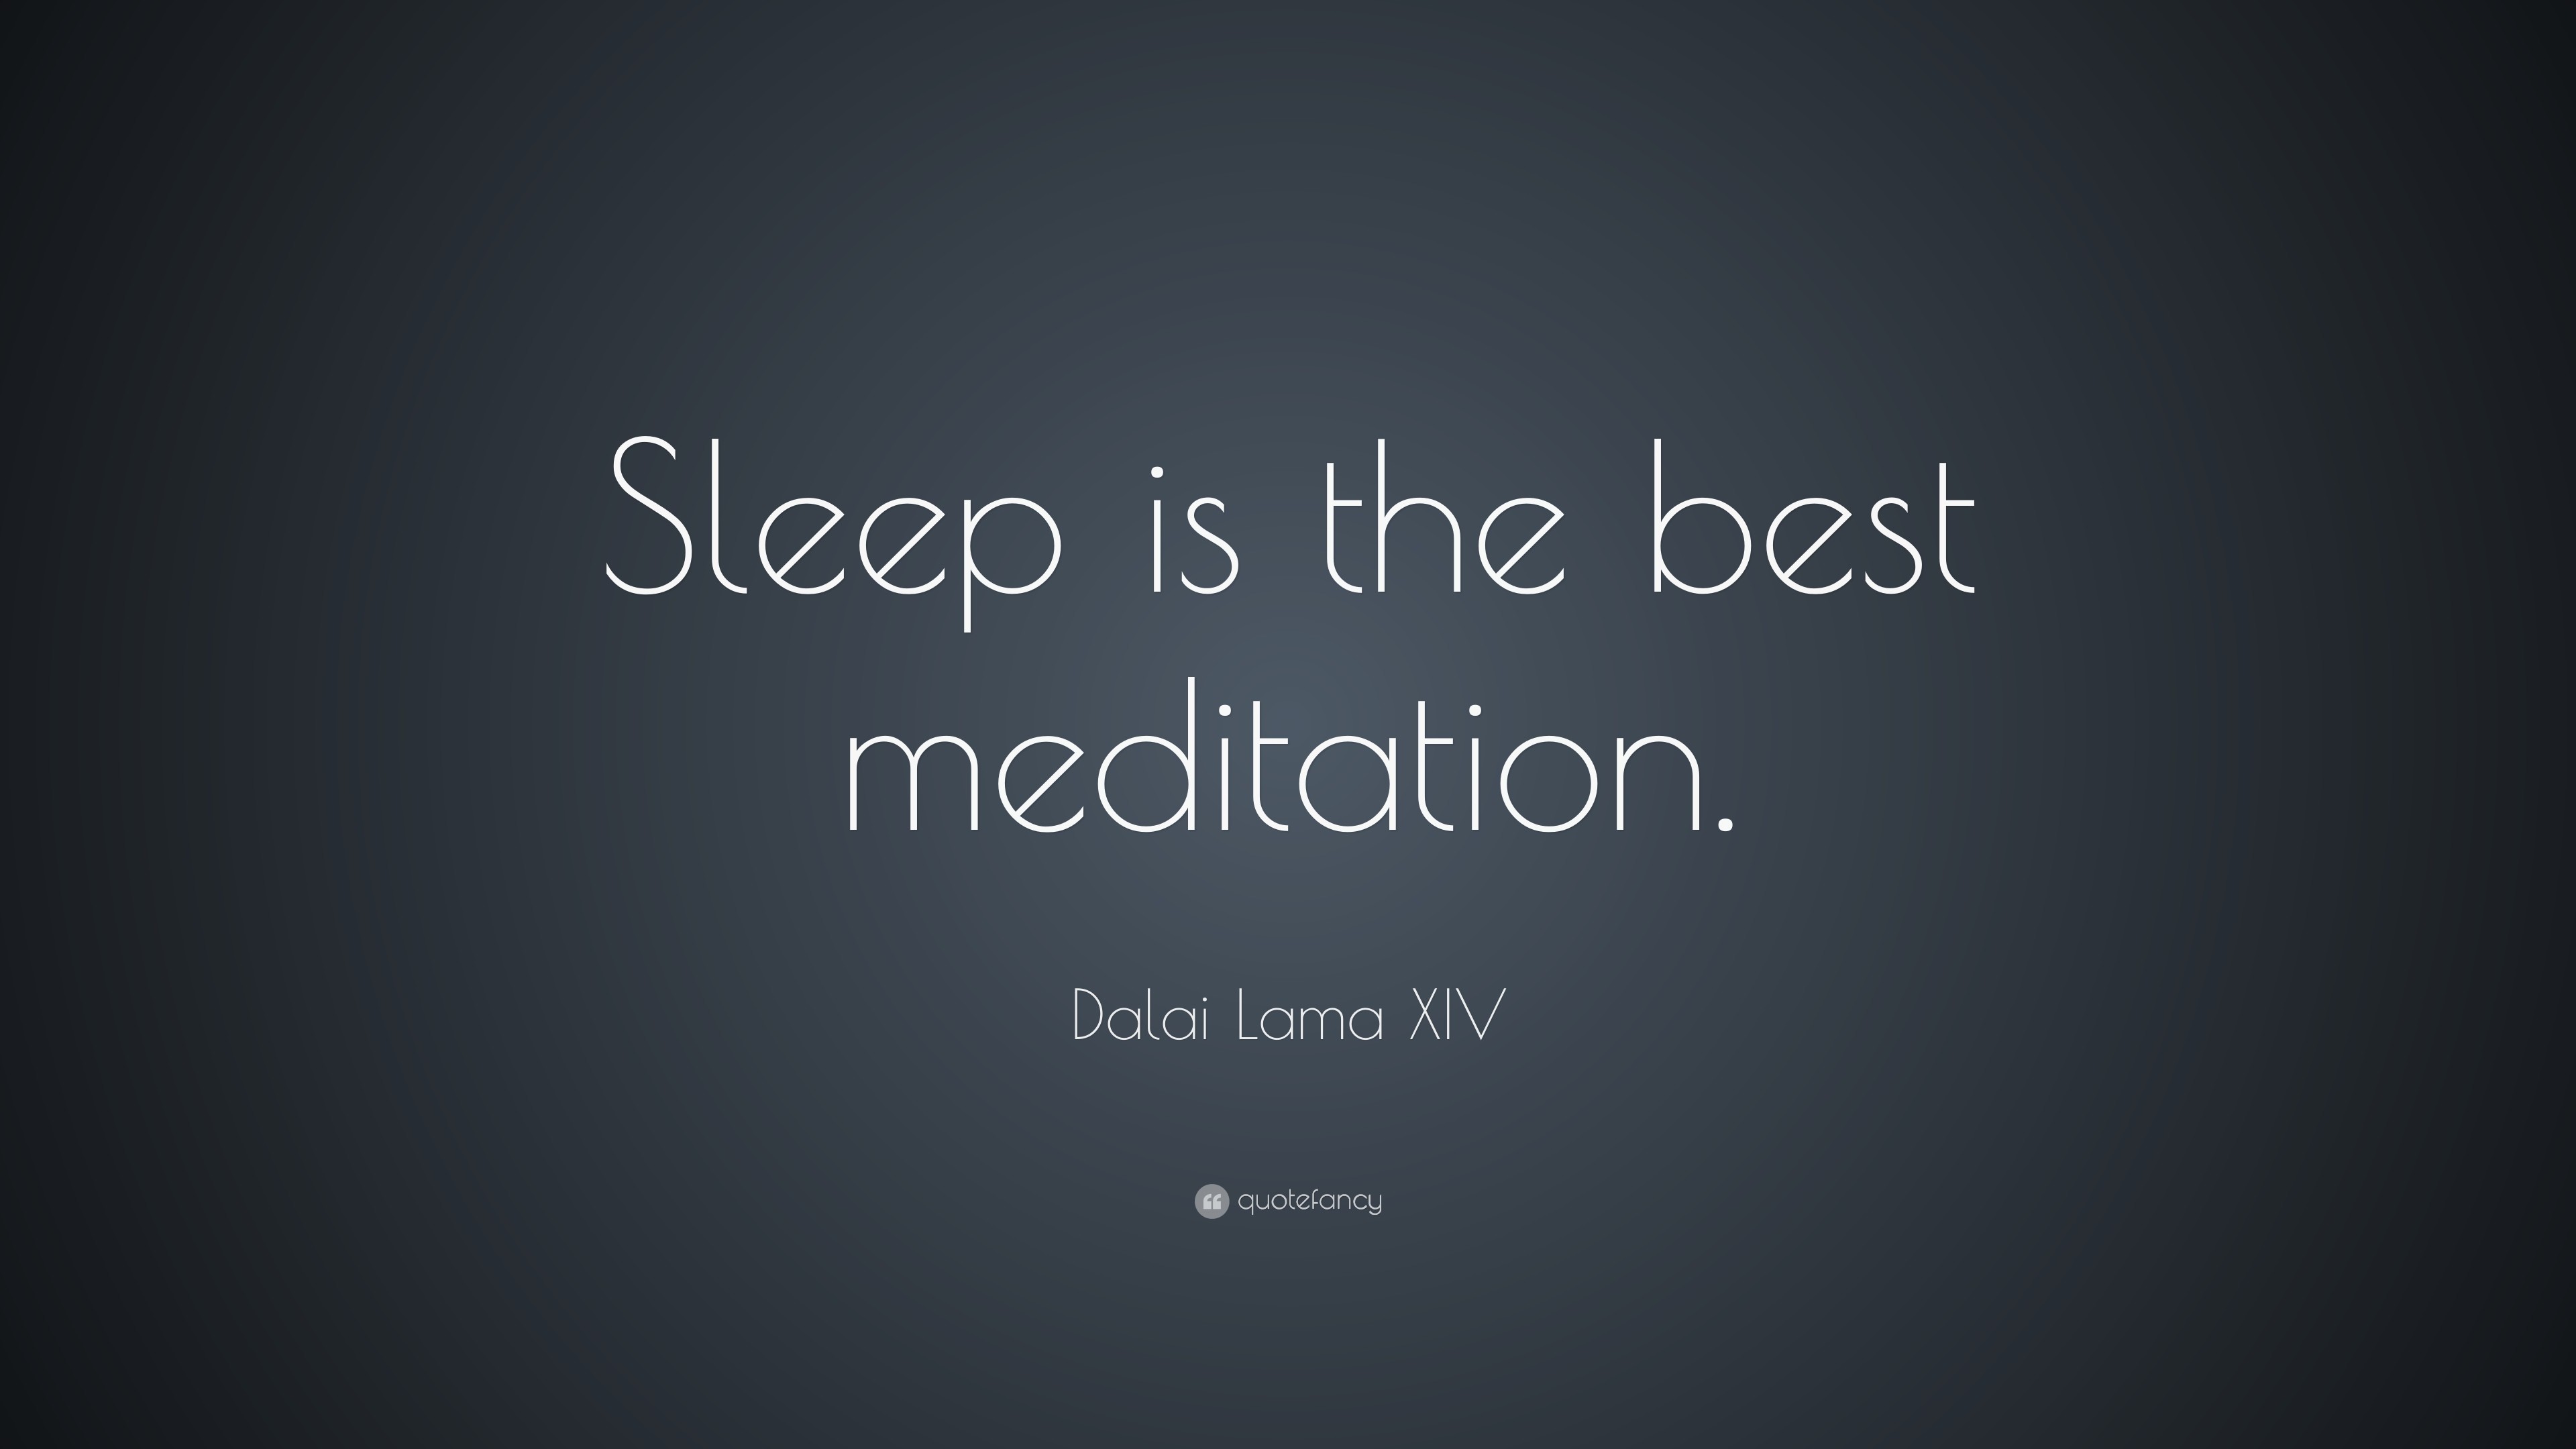 3840x2160 Dalai Lama XIV Quote: “Sleep is the best meditation.”